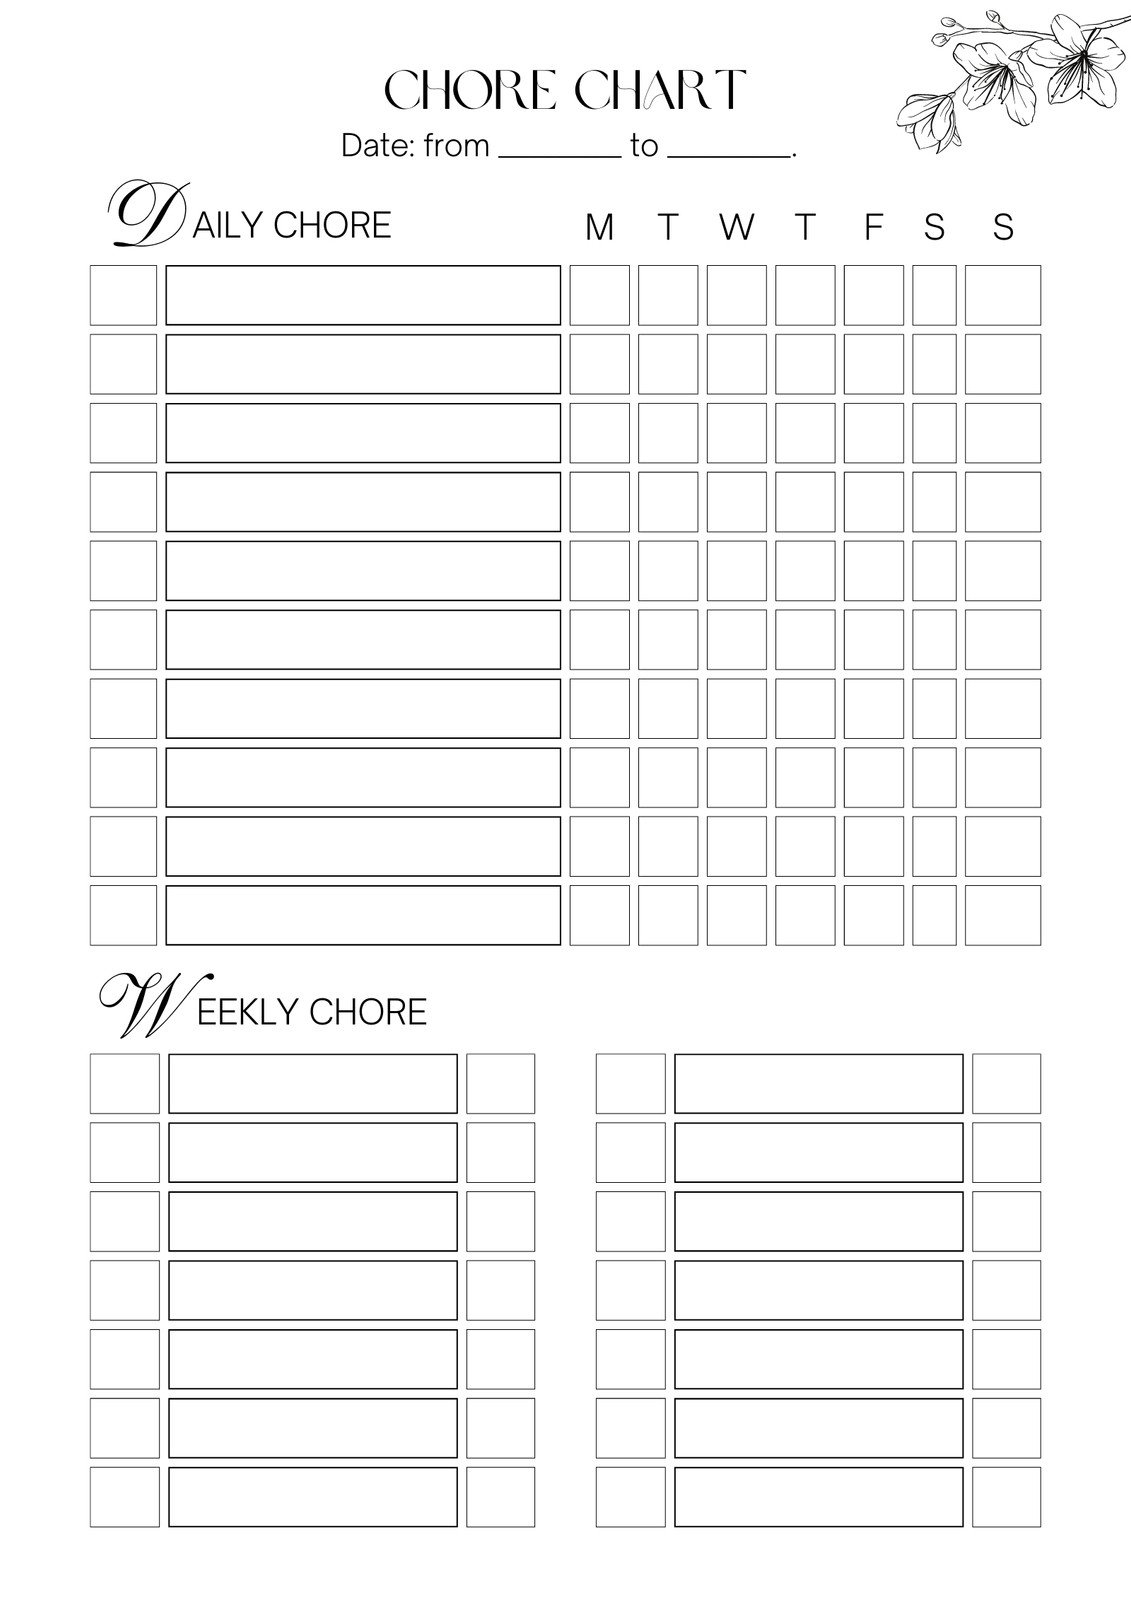 Free Customizable Chore Chart Templates To Print Canva - Free Printable Charts